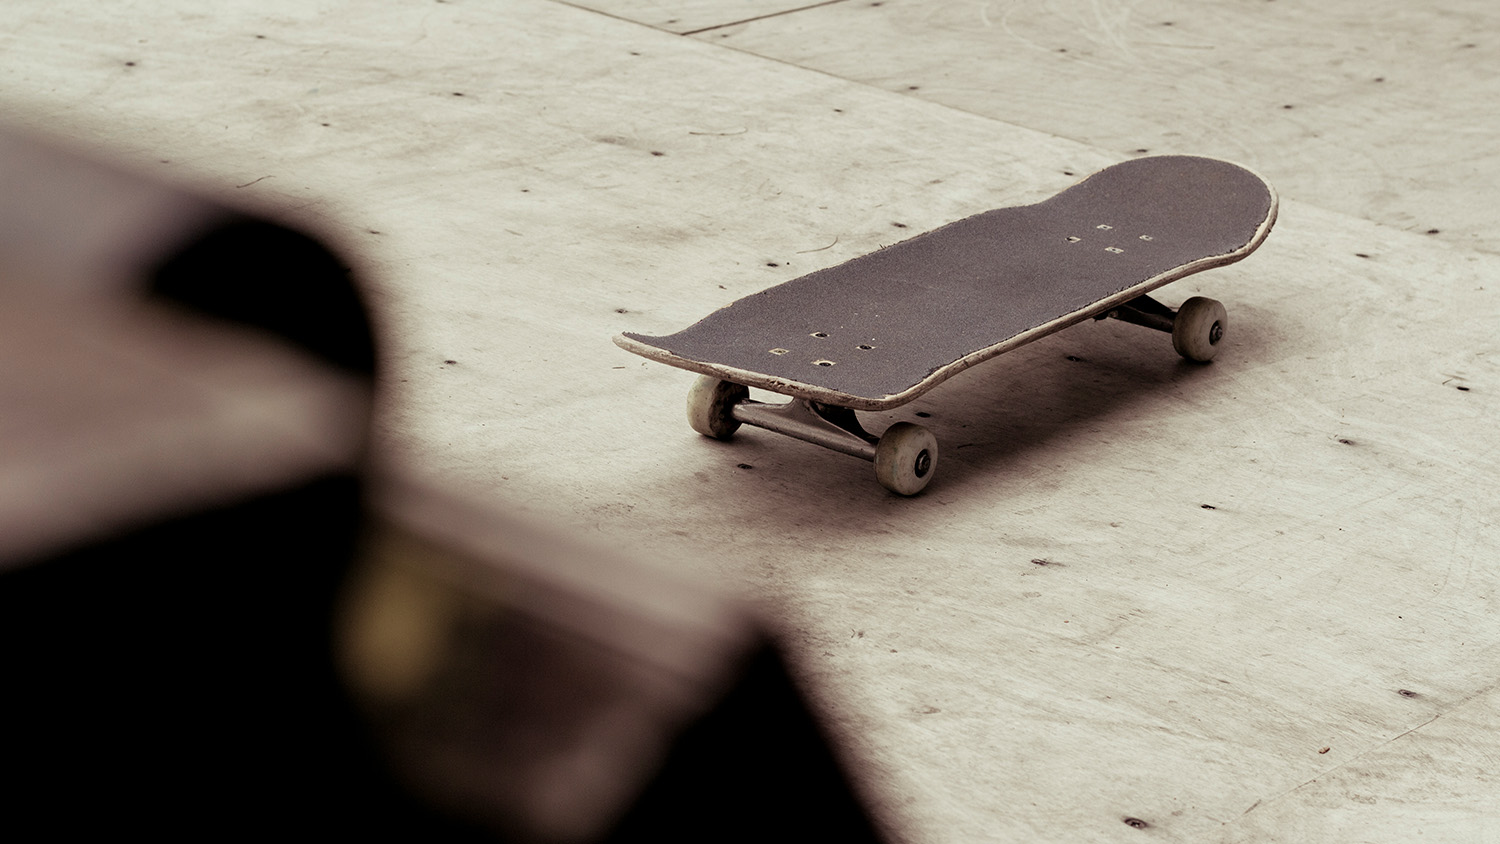 A skateboard sitting alone at a skate park.